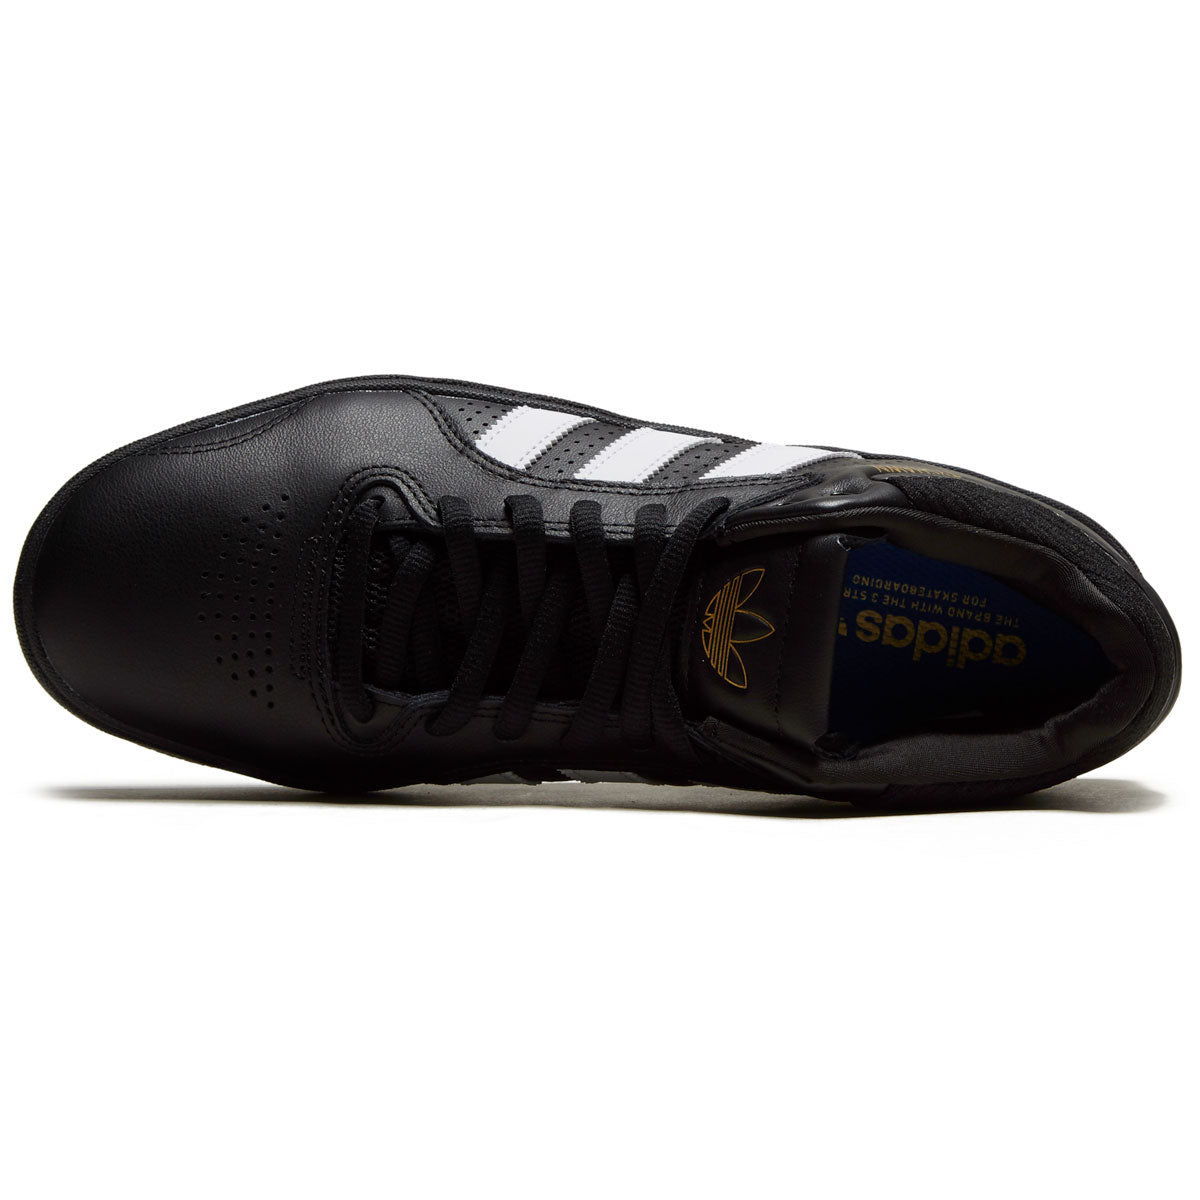 Adidas Tyshawn Shoes - Core Black/White/Gold Metallic image 3